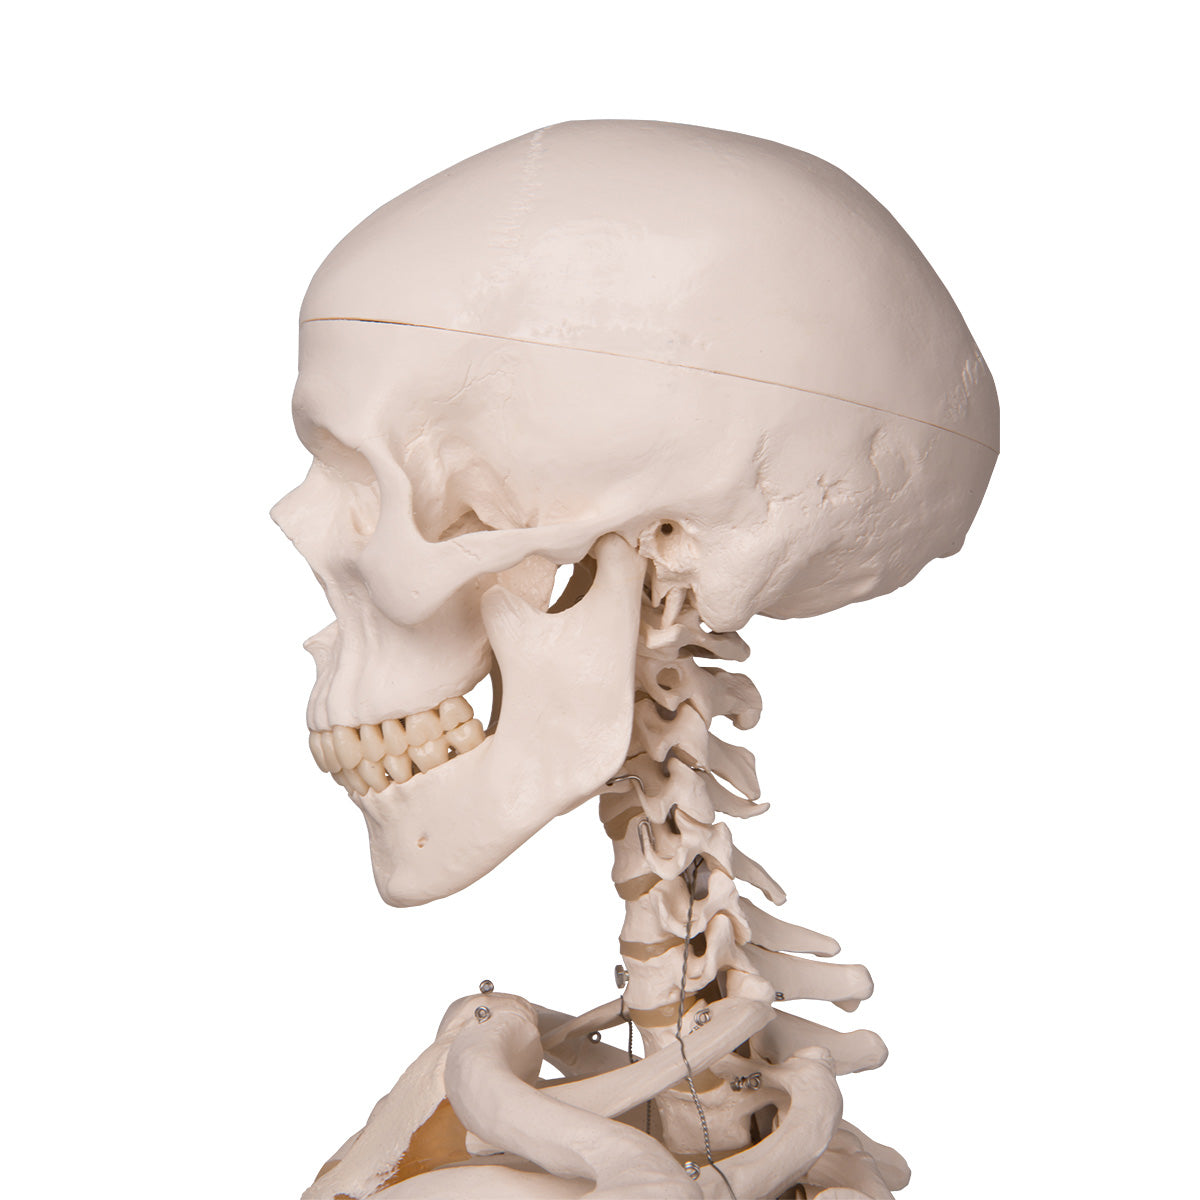 A10 Skeleton Model - Stan